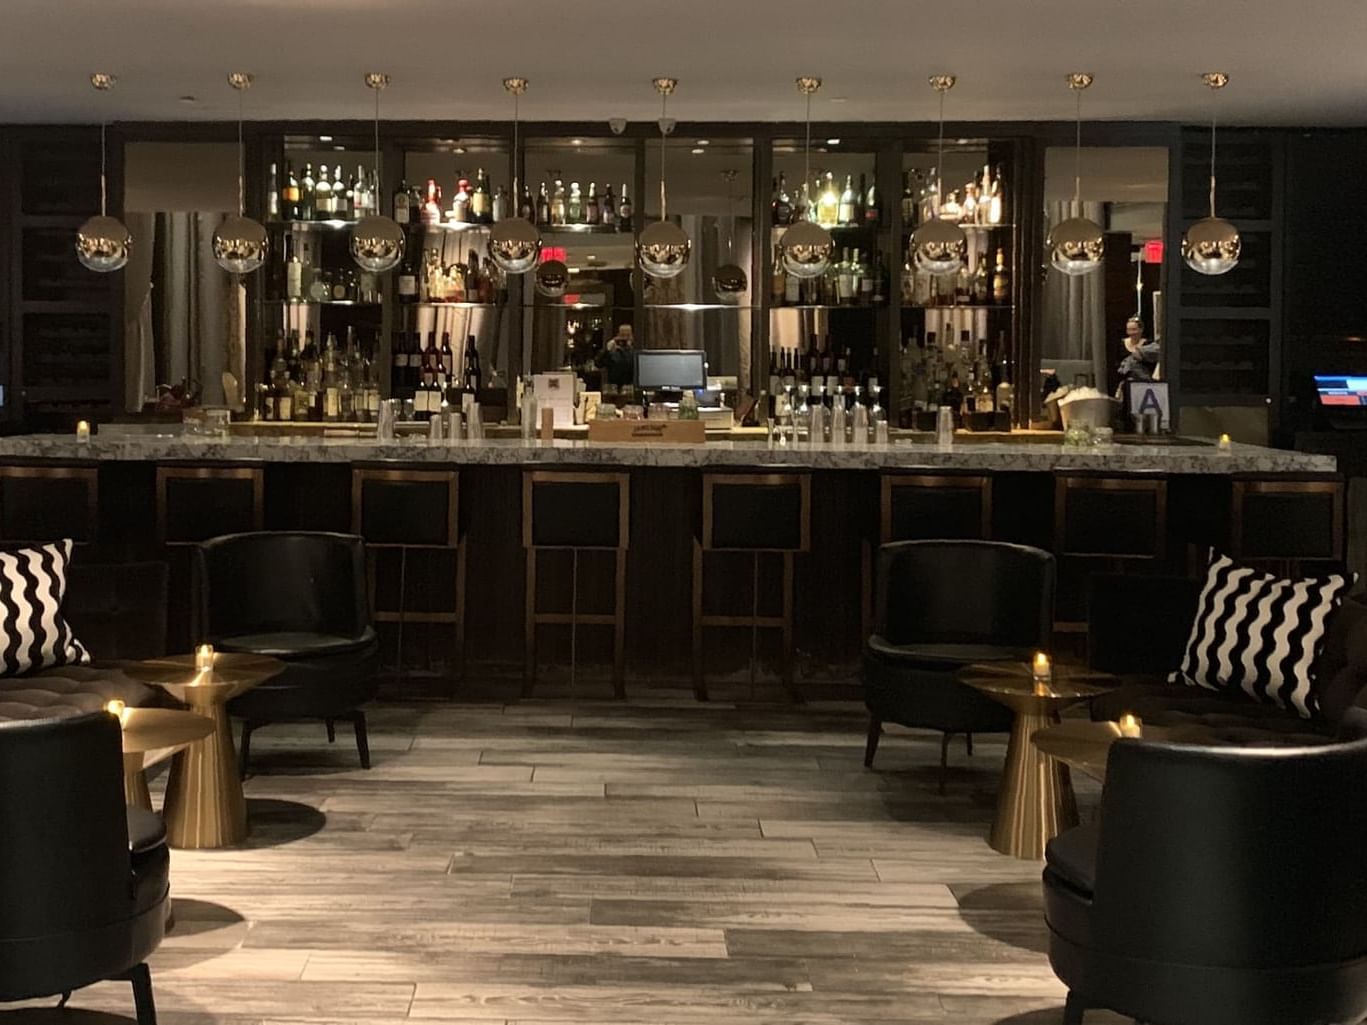 The Empire Hotel Lobby Bar in New York City